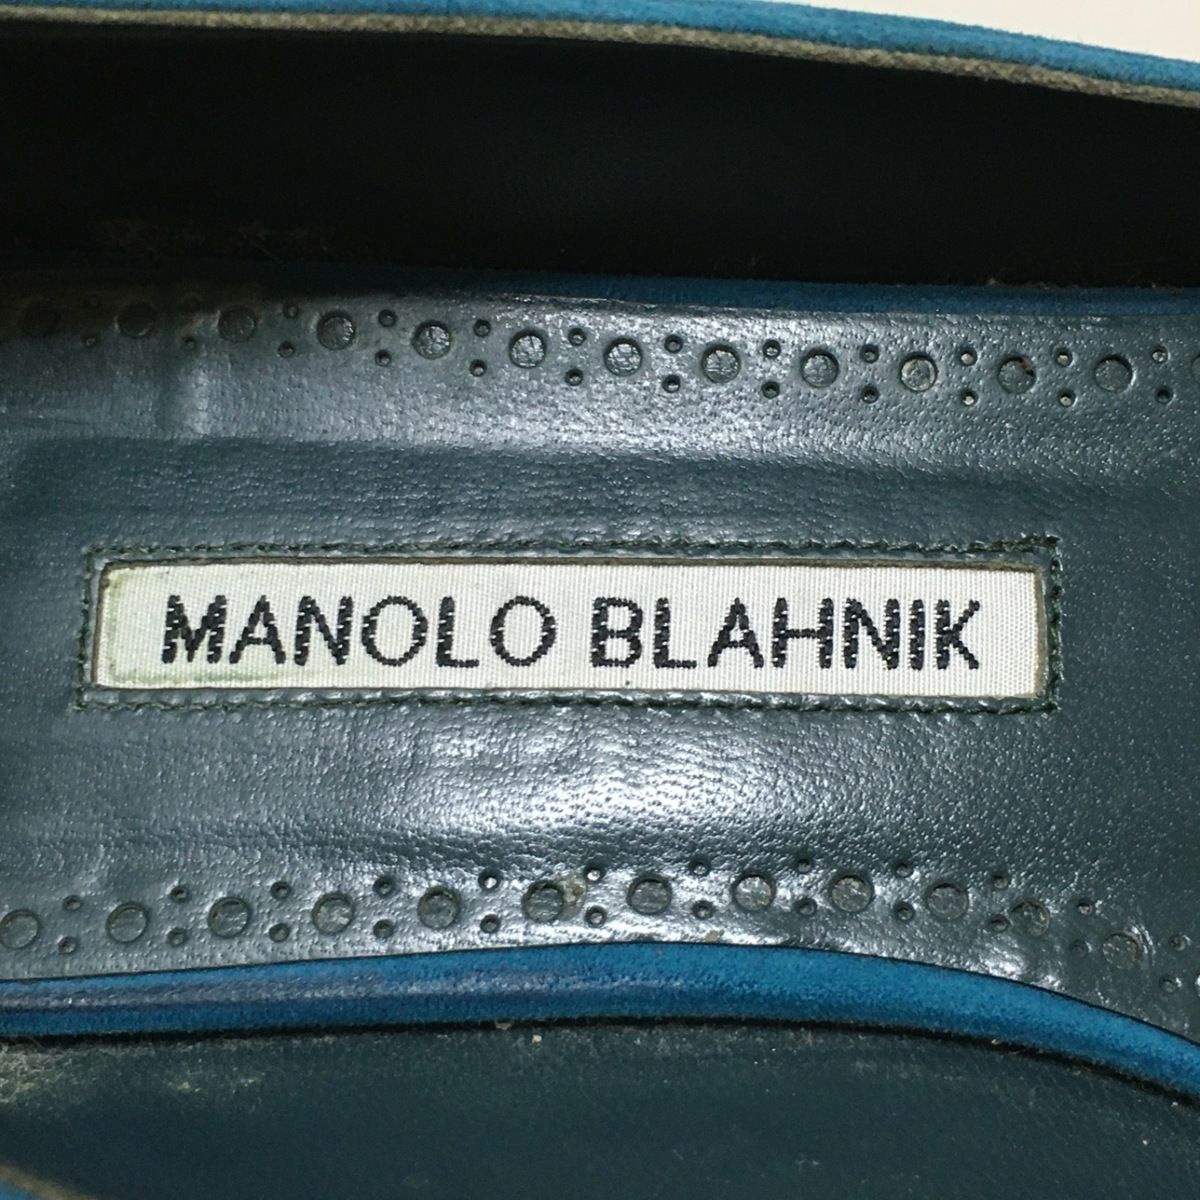 MANOLO BLAHNIK(マノロブラニク) フラットシューズ 37 レディース - ライトブルー スエード